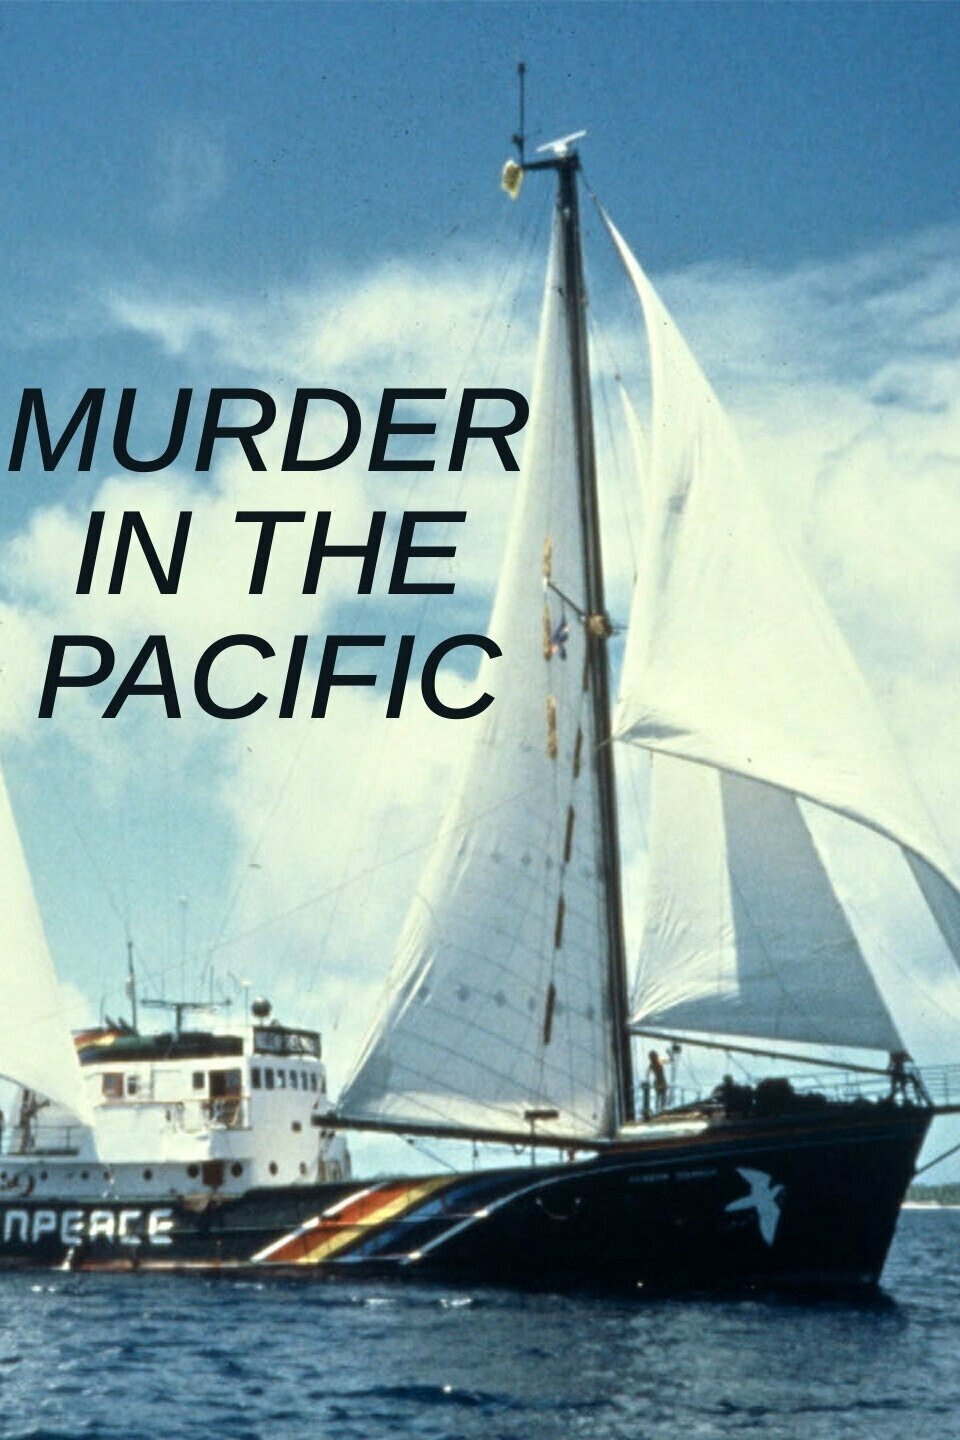 Murder in the Pacific ne zaman